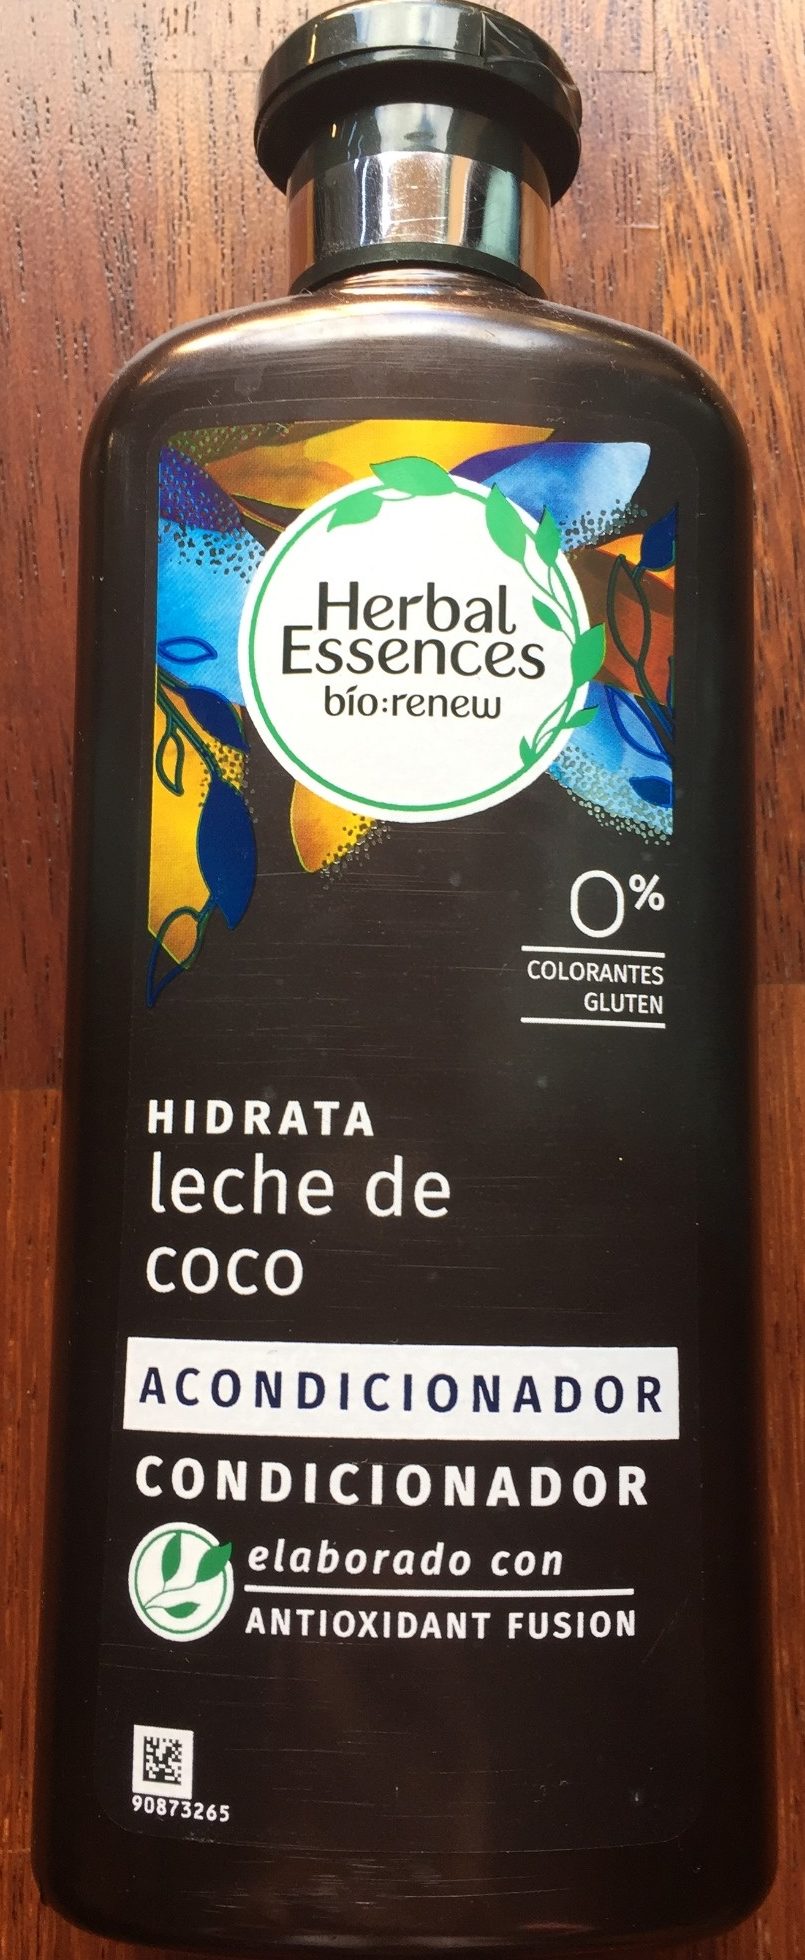 Acondicionador Hidrata Leche de Coco - Product - es